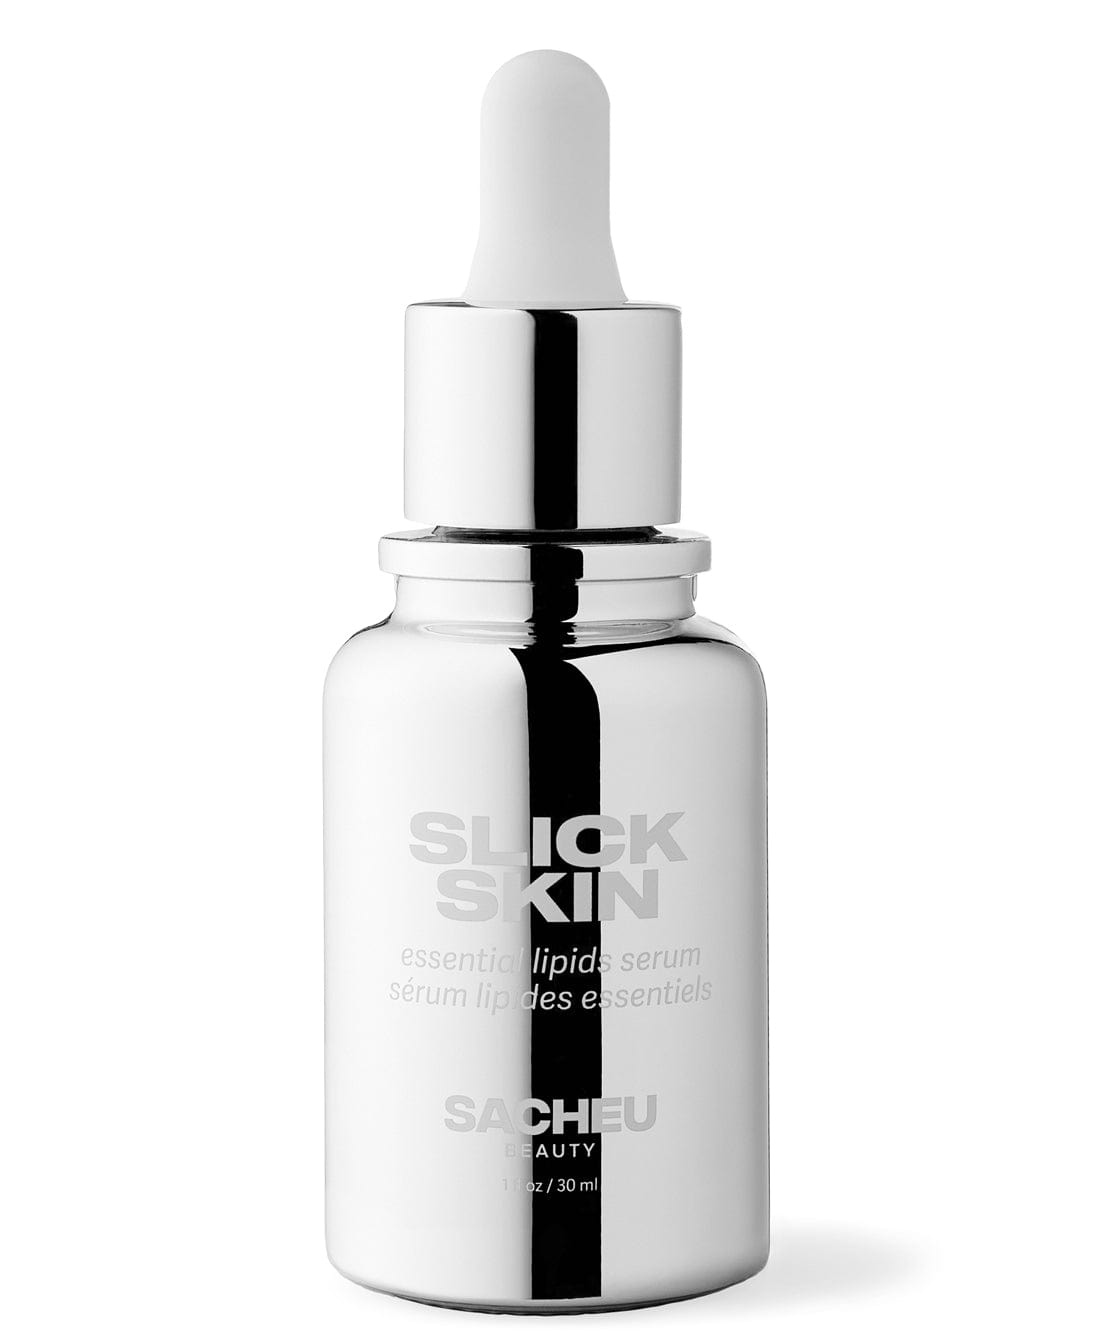 SLICK SKIN MEGA-KIT - 3x 1oz bottles | SACHEU Beauty.